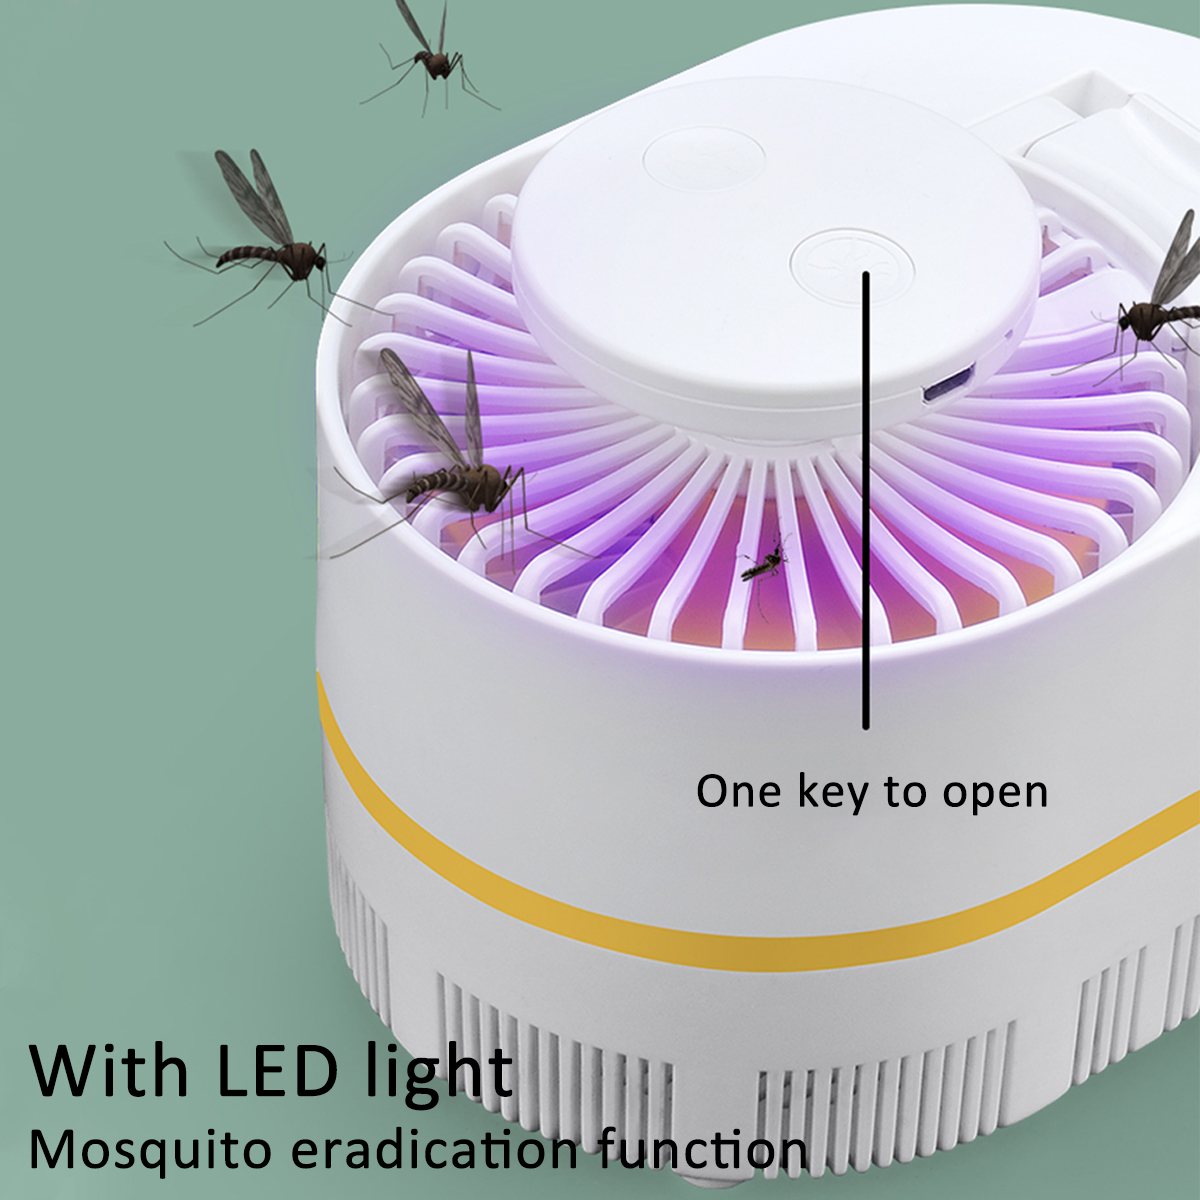 H35844-Mosquito-Eradicatio-Desktop-Fan-3-Gears-Wind-Speed-LED-Light-Cooling-Fans-USB-Charging-Mosqui-1840758-5